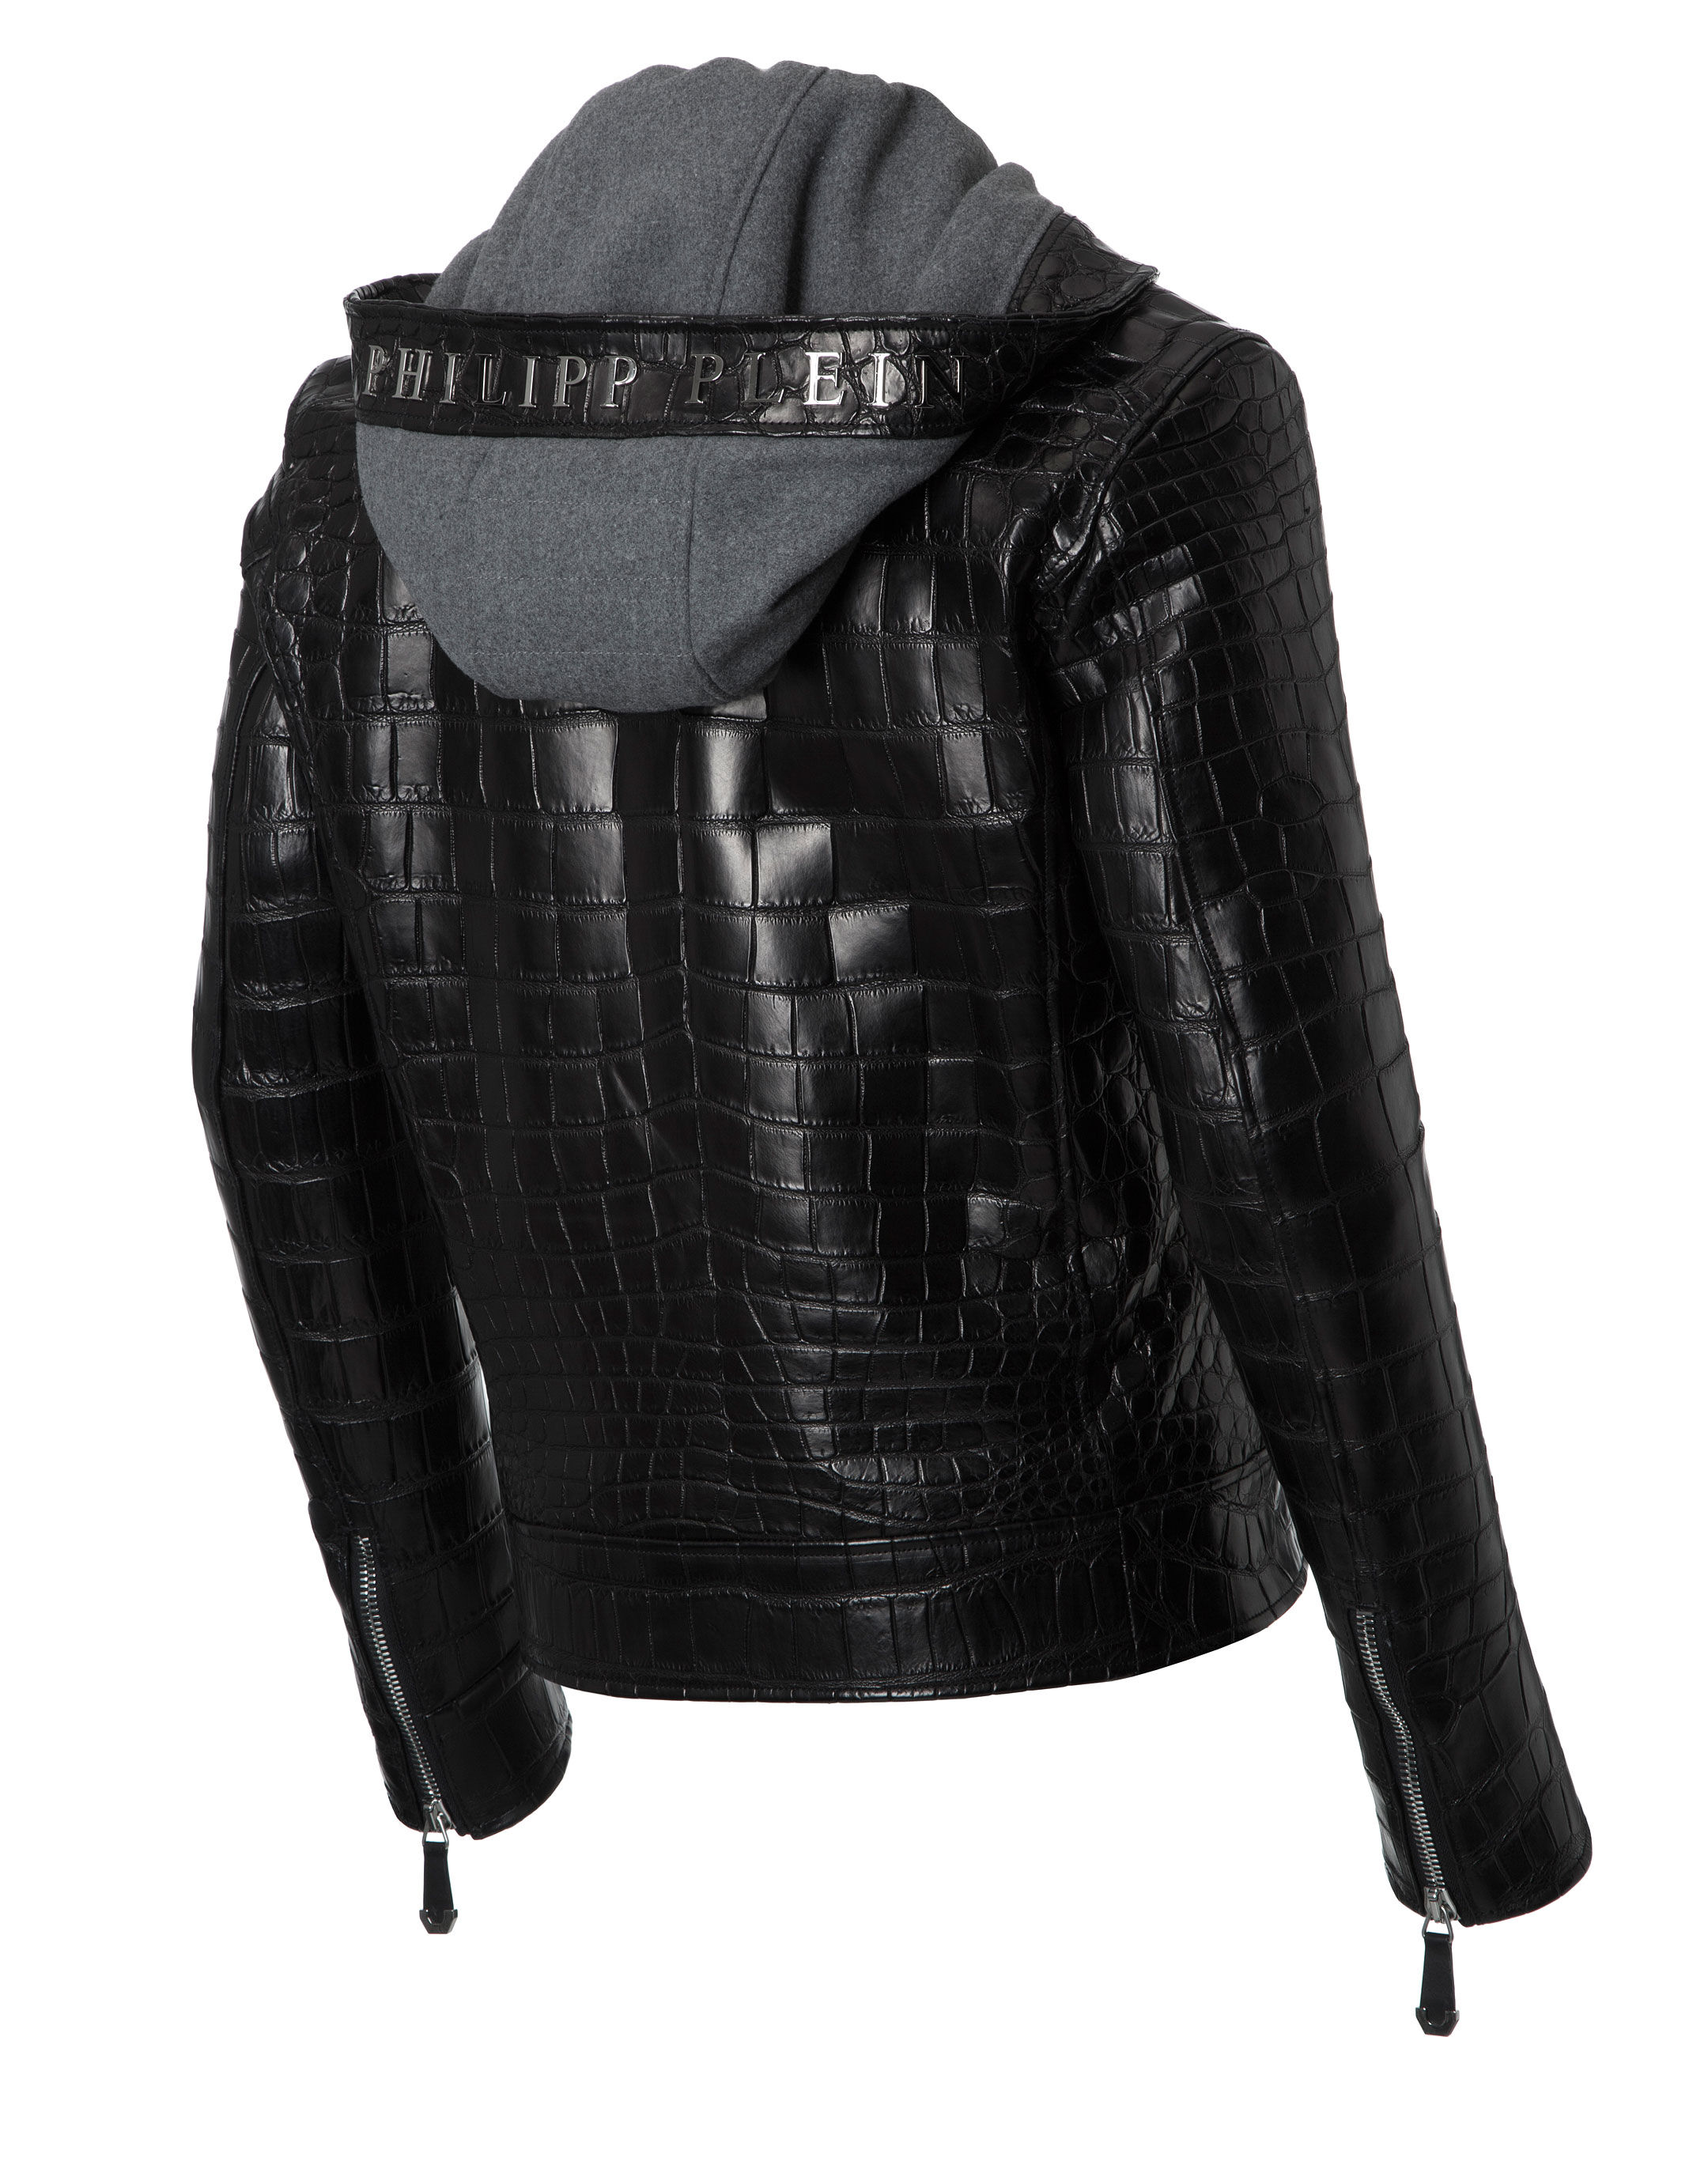 philipp plein leather jacket limited edition